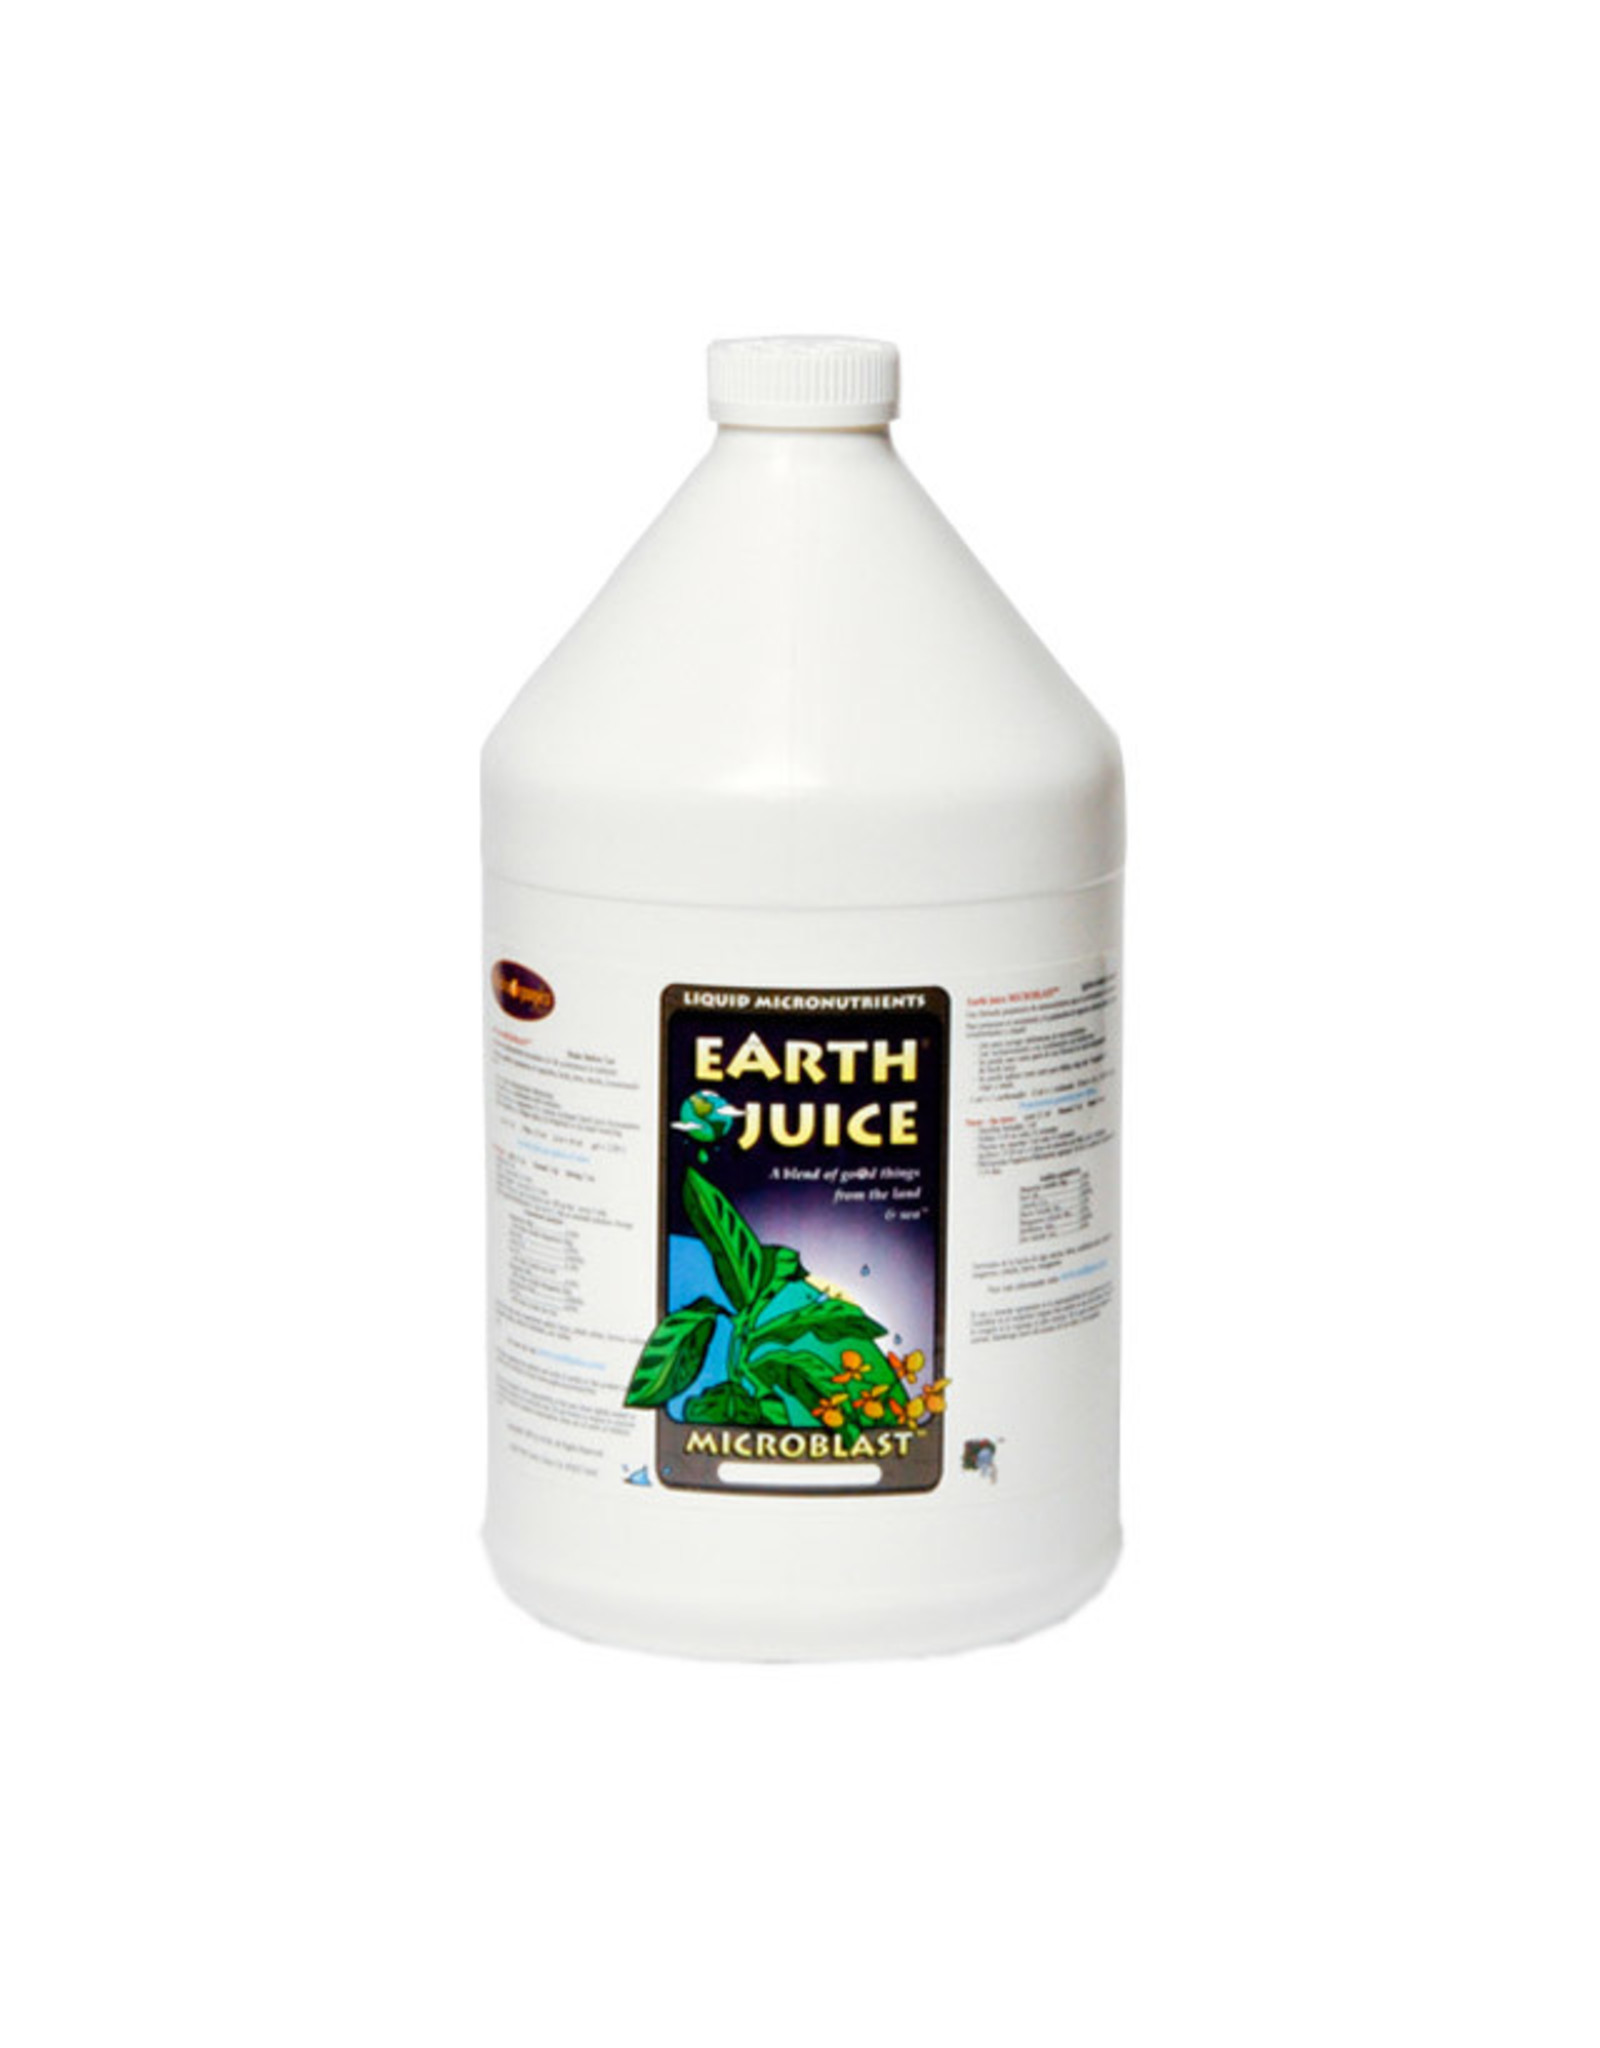 Earth Juice Earth Juice Microblast, 1 gal